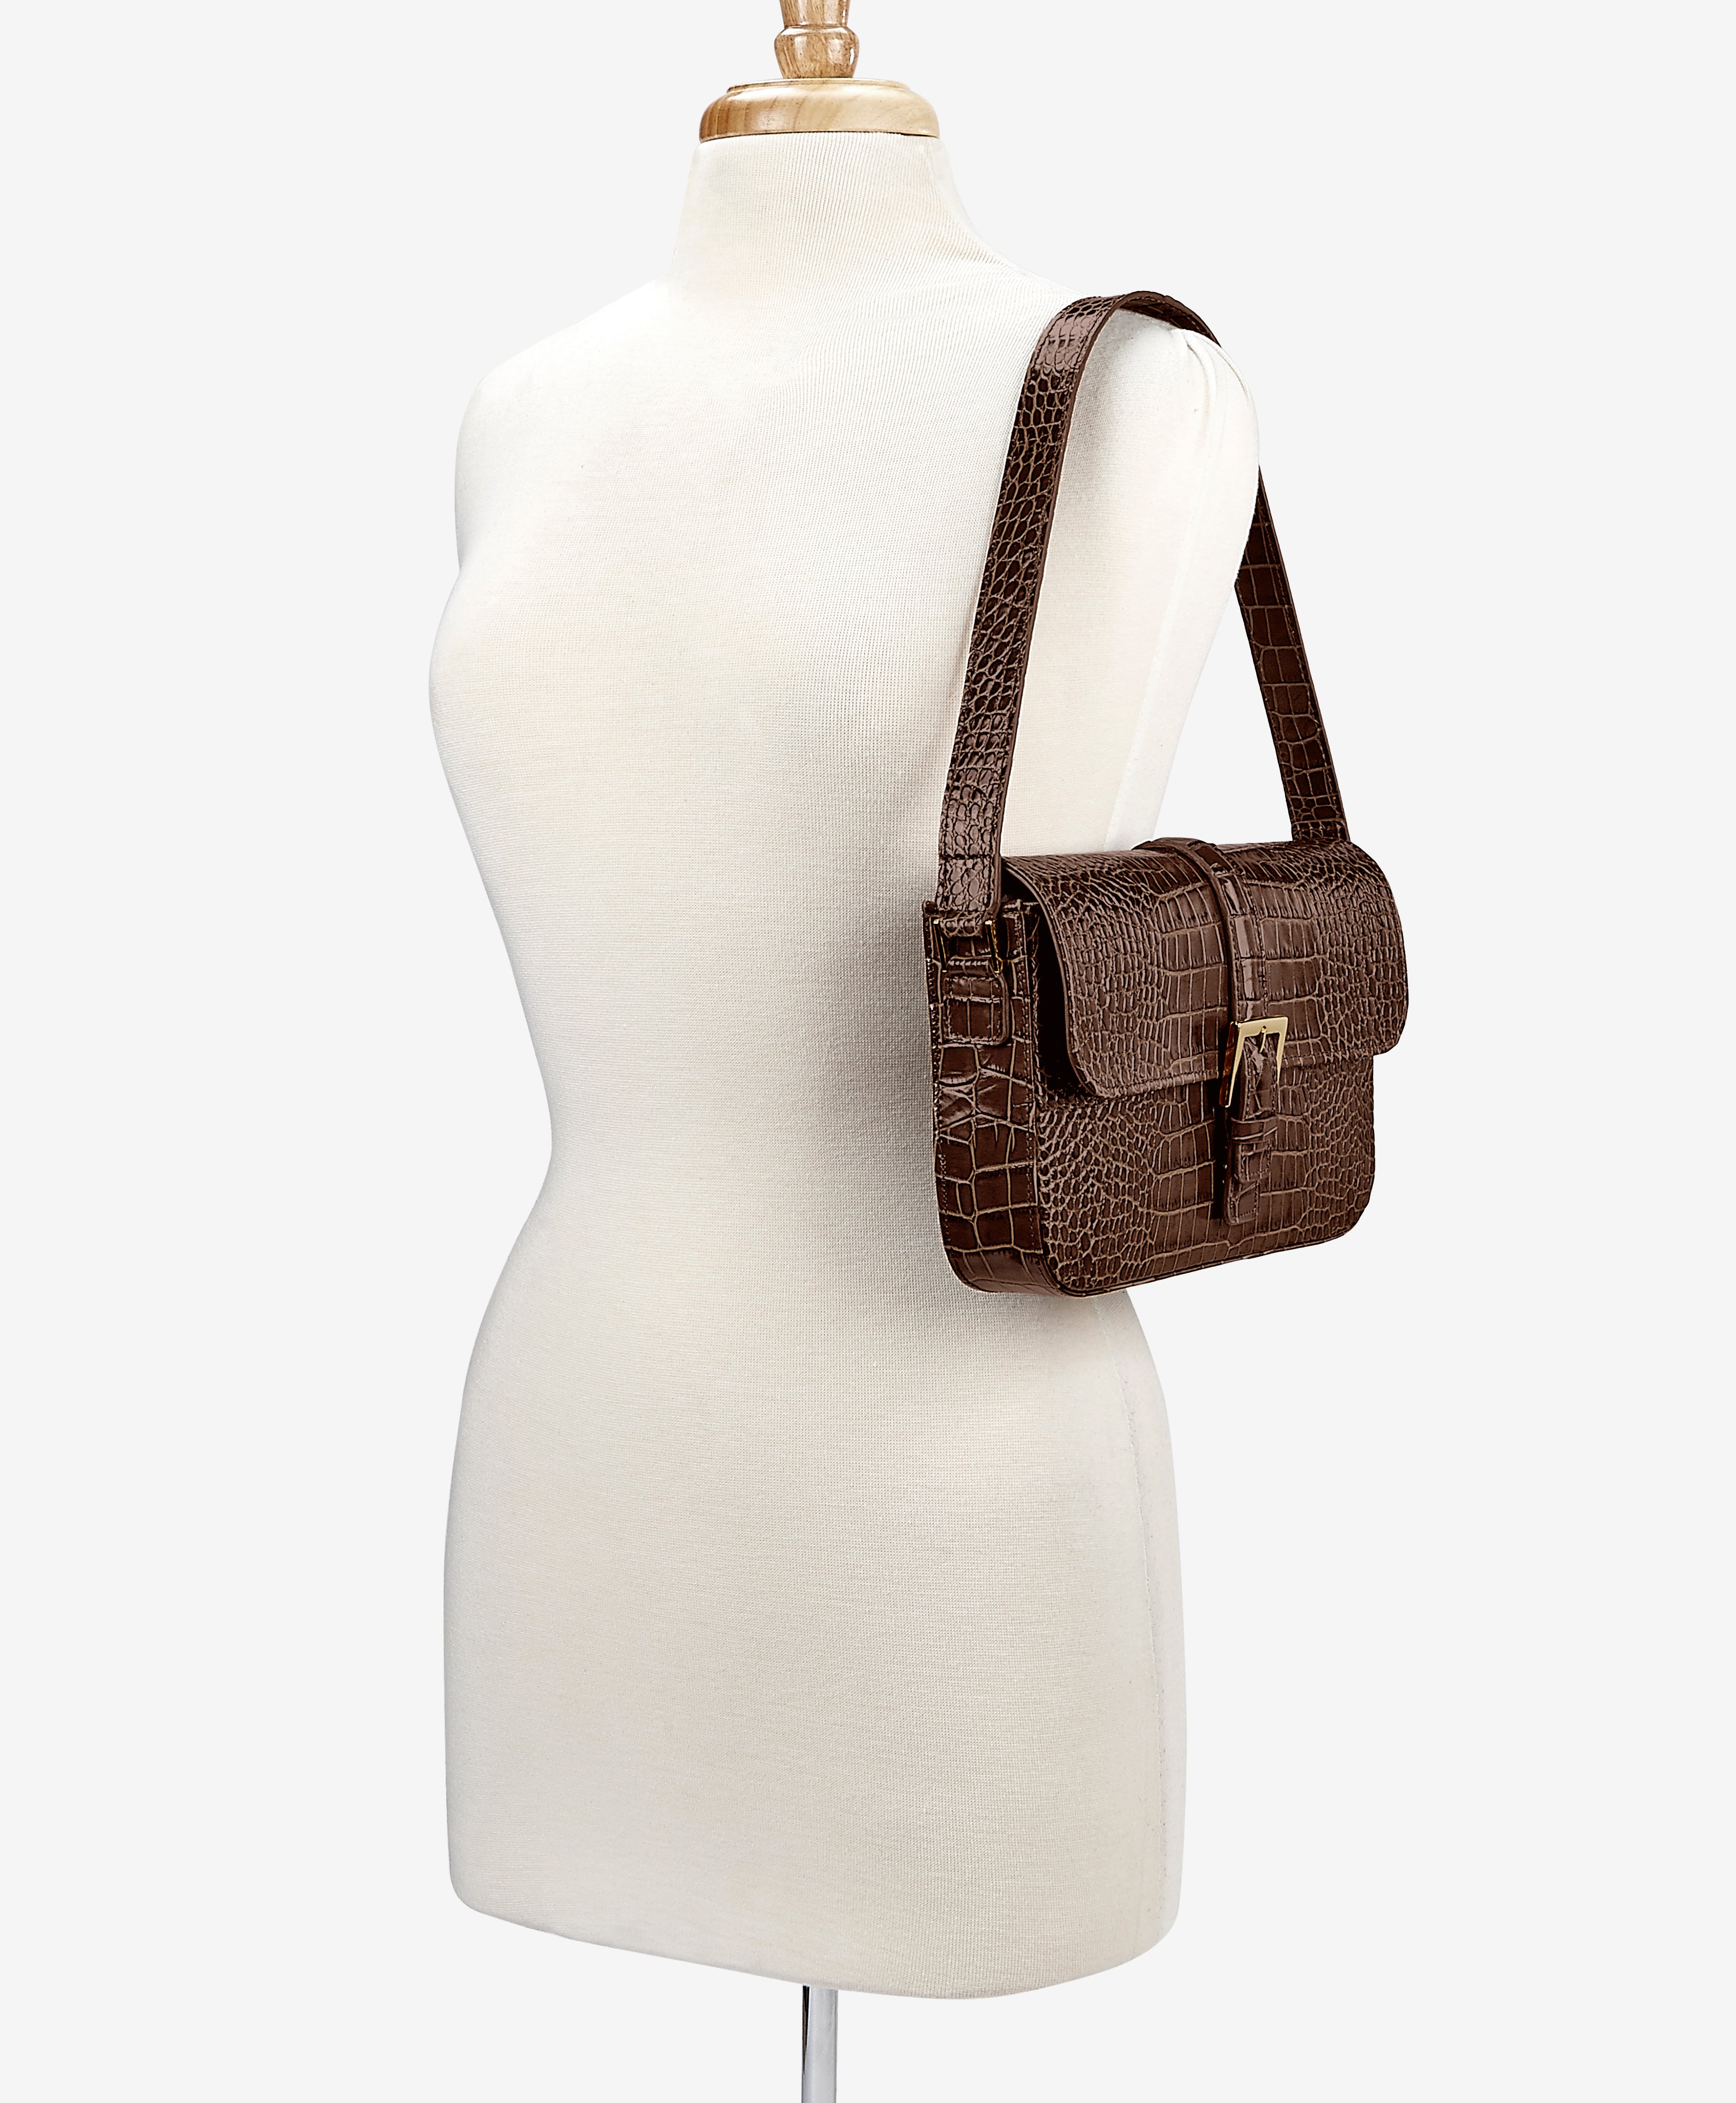 Margot Leather Handbags